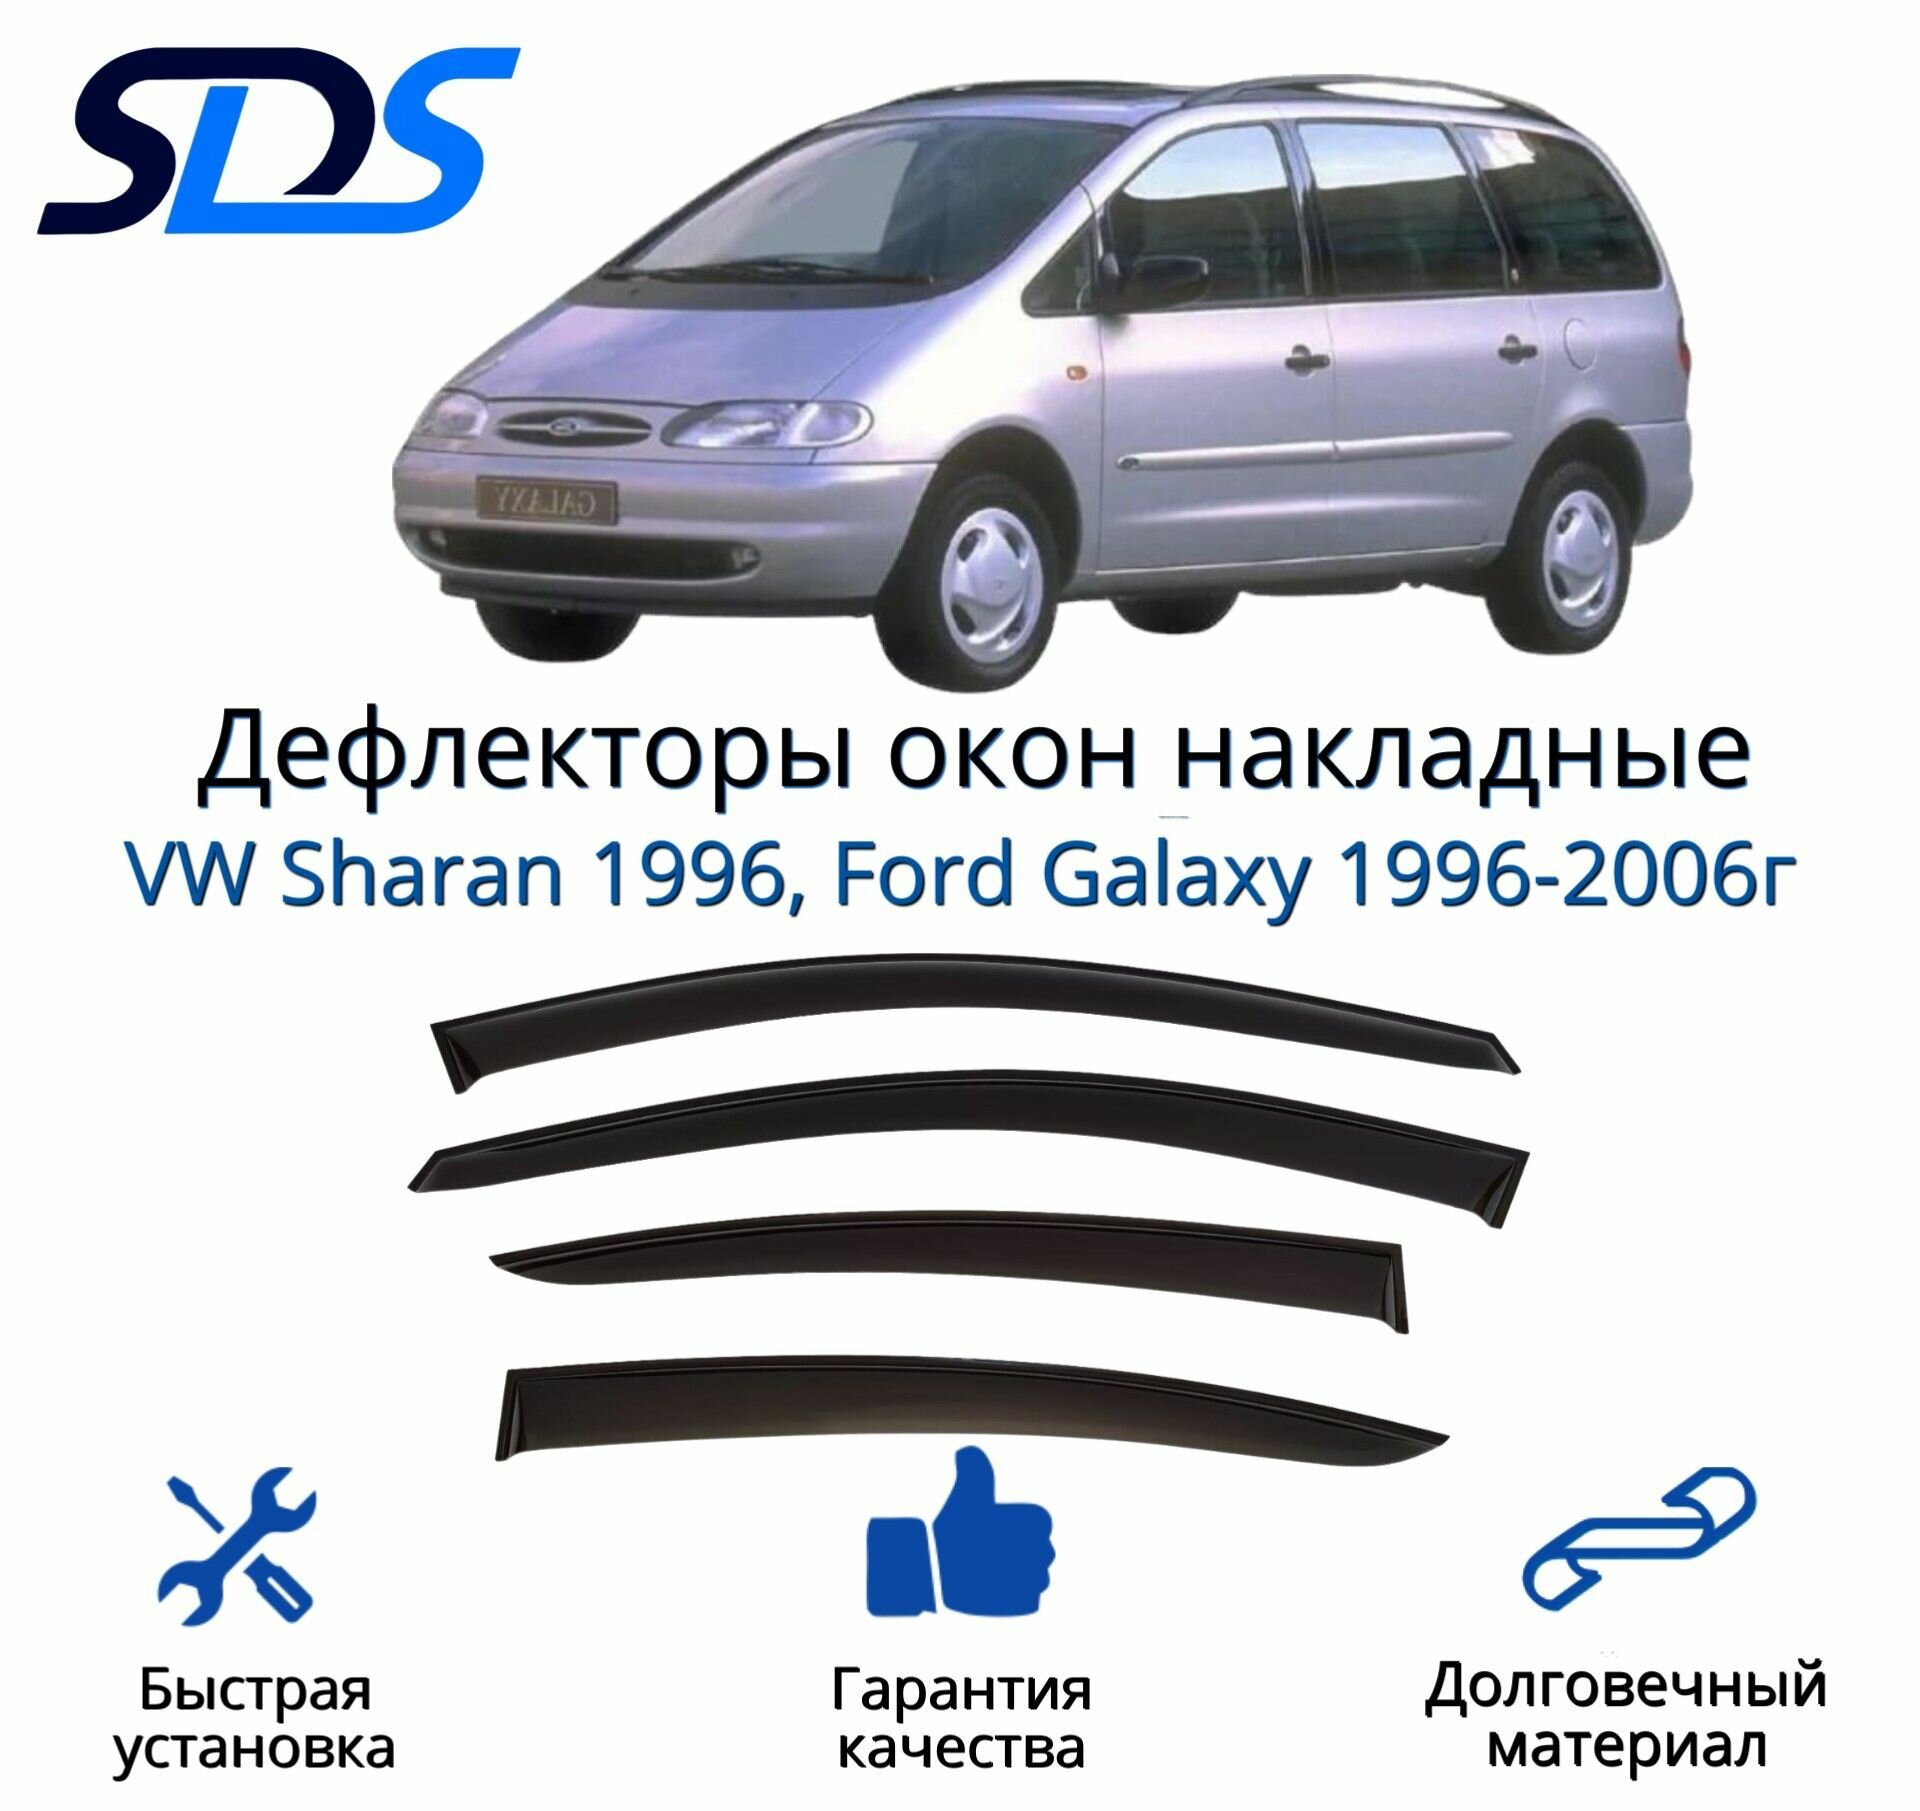 Дефлекторы окон (ветровики) для VW Sharan 1996 Ford Galaxy 1996-2006г.